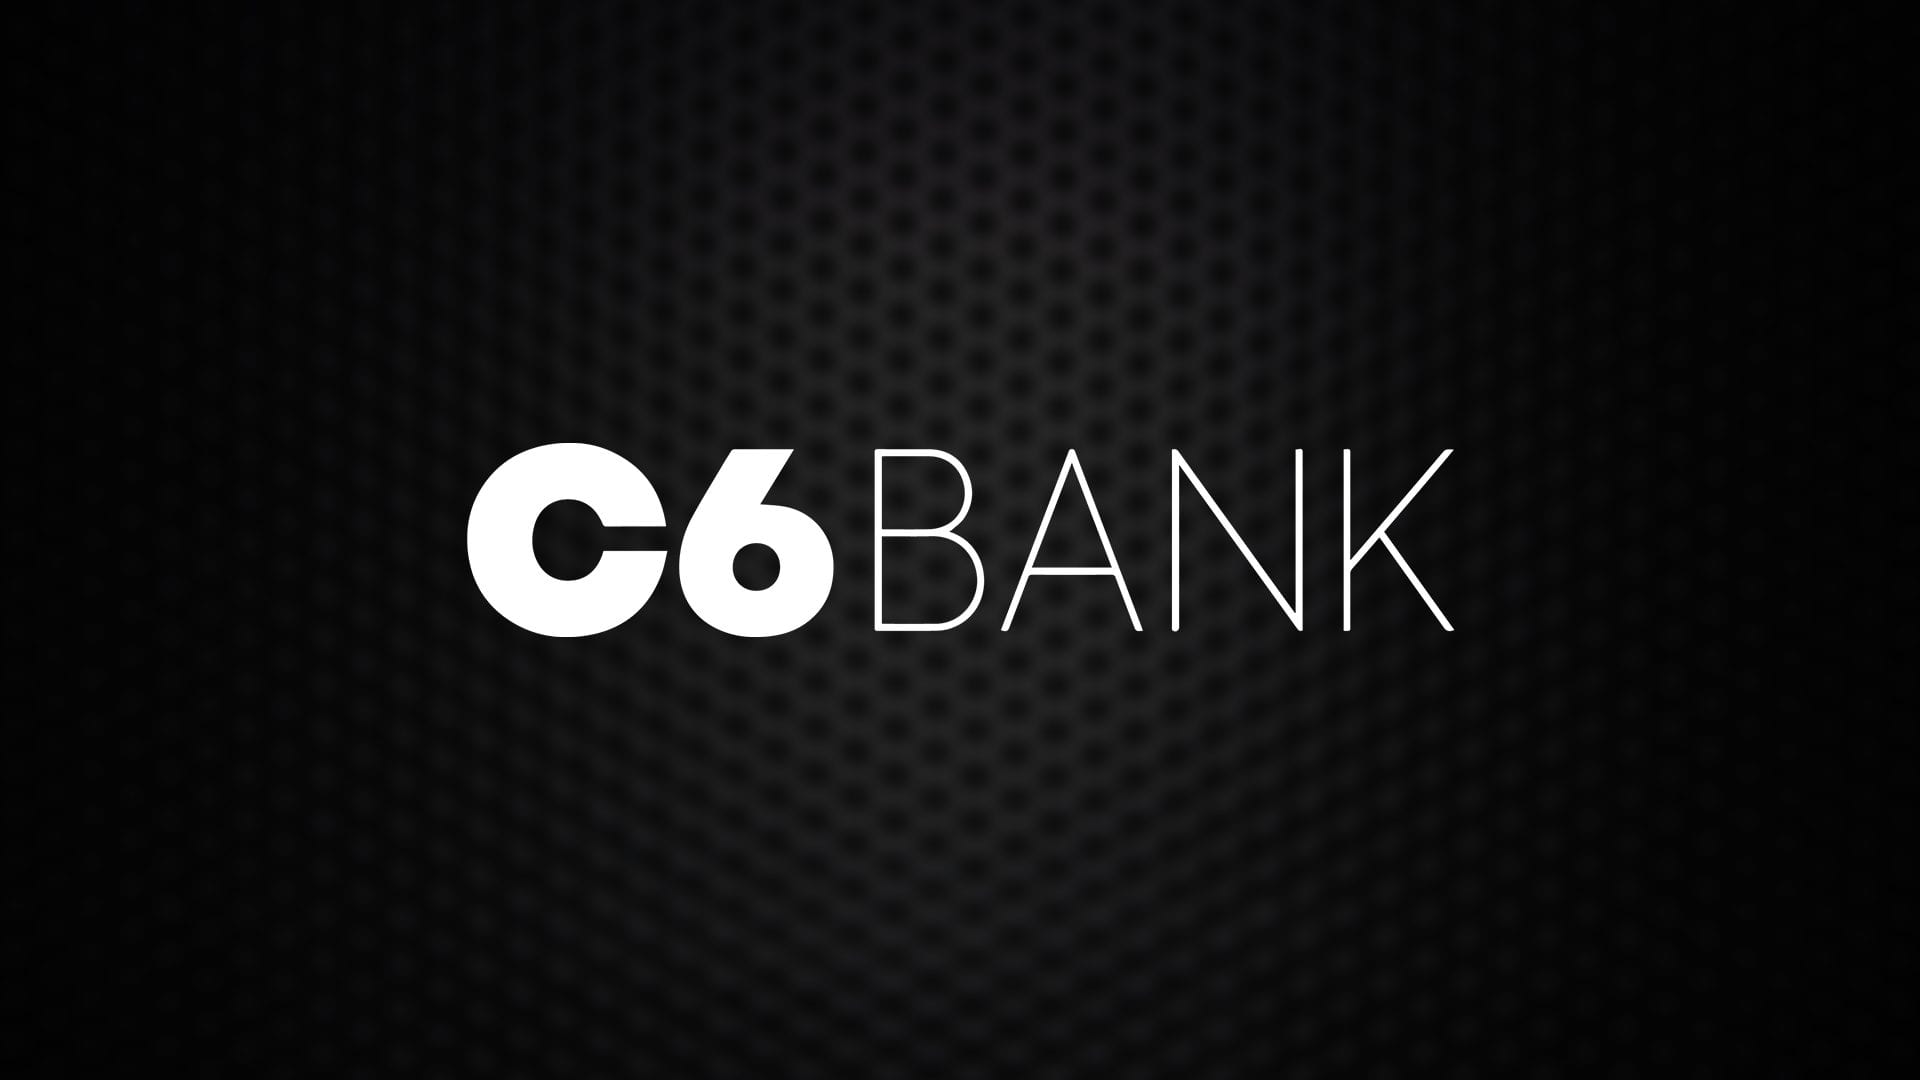 Visão geral banco c6 bank